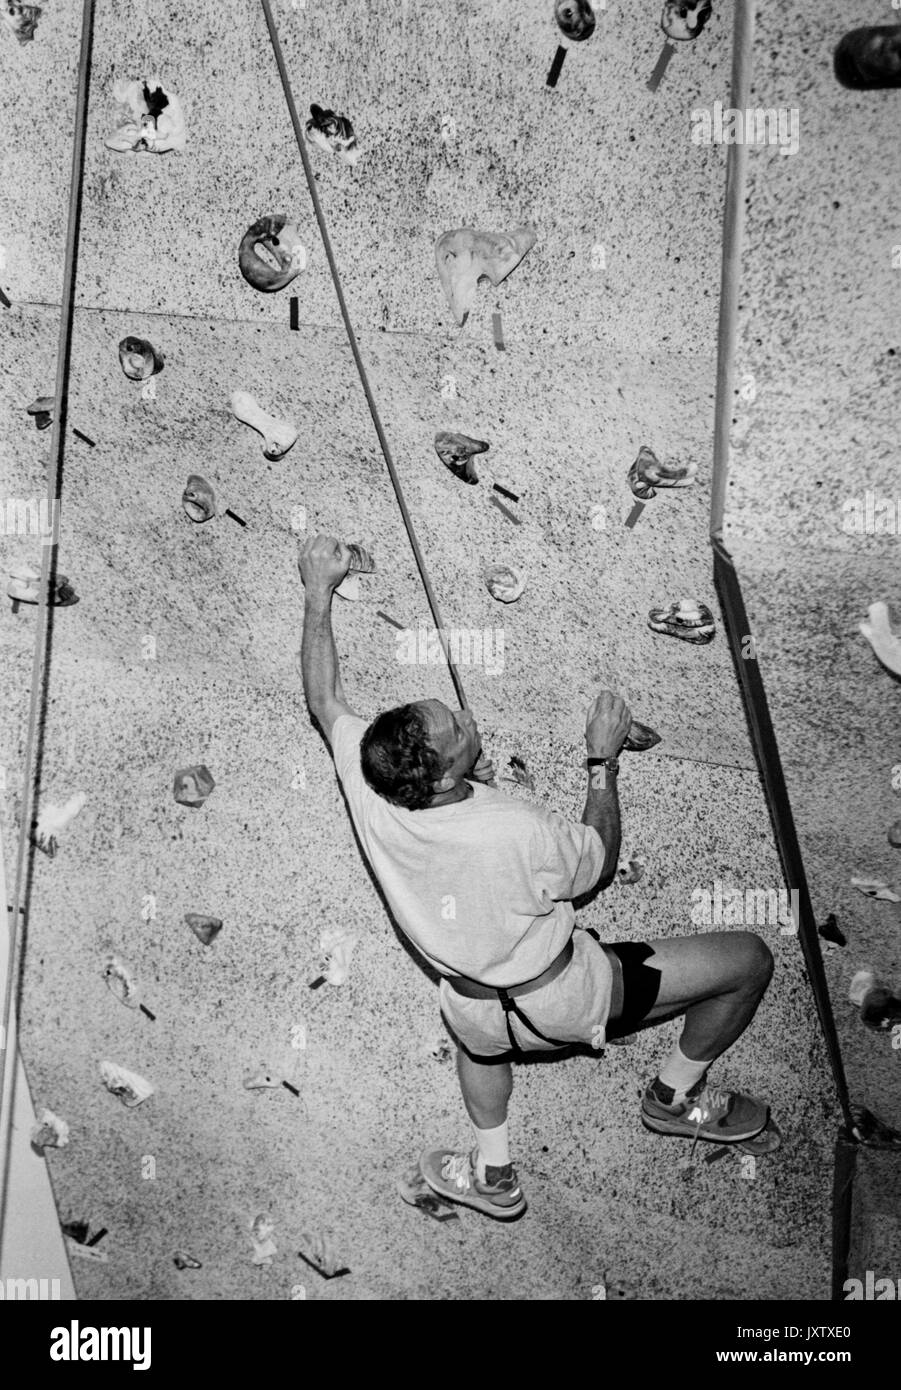 Michael rubens bloomberg, candid shot, Bloomberg è la scalata di una parete di arrampicata, ca 47 anni di età, 1997. Foto Stock